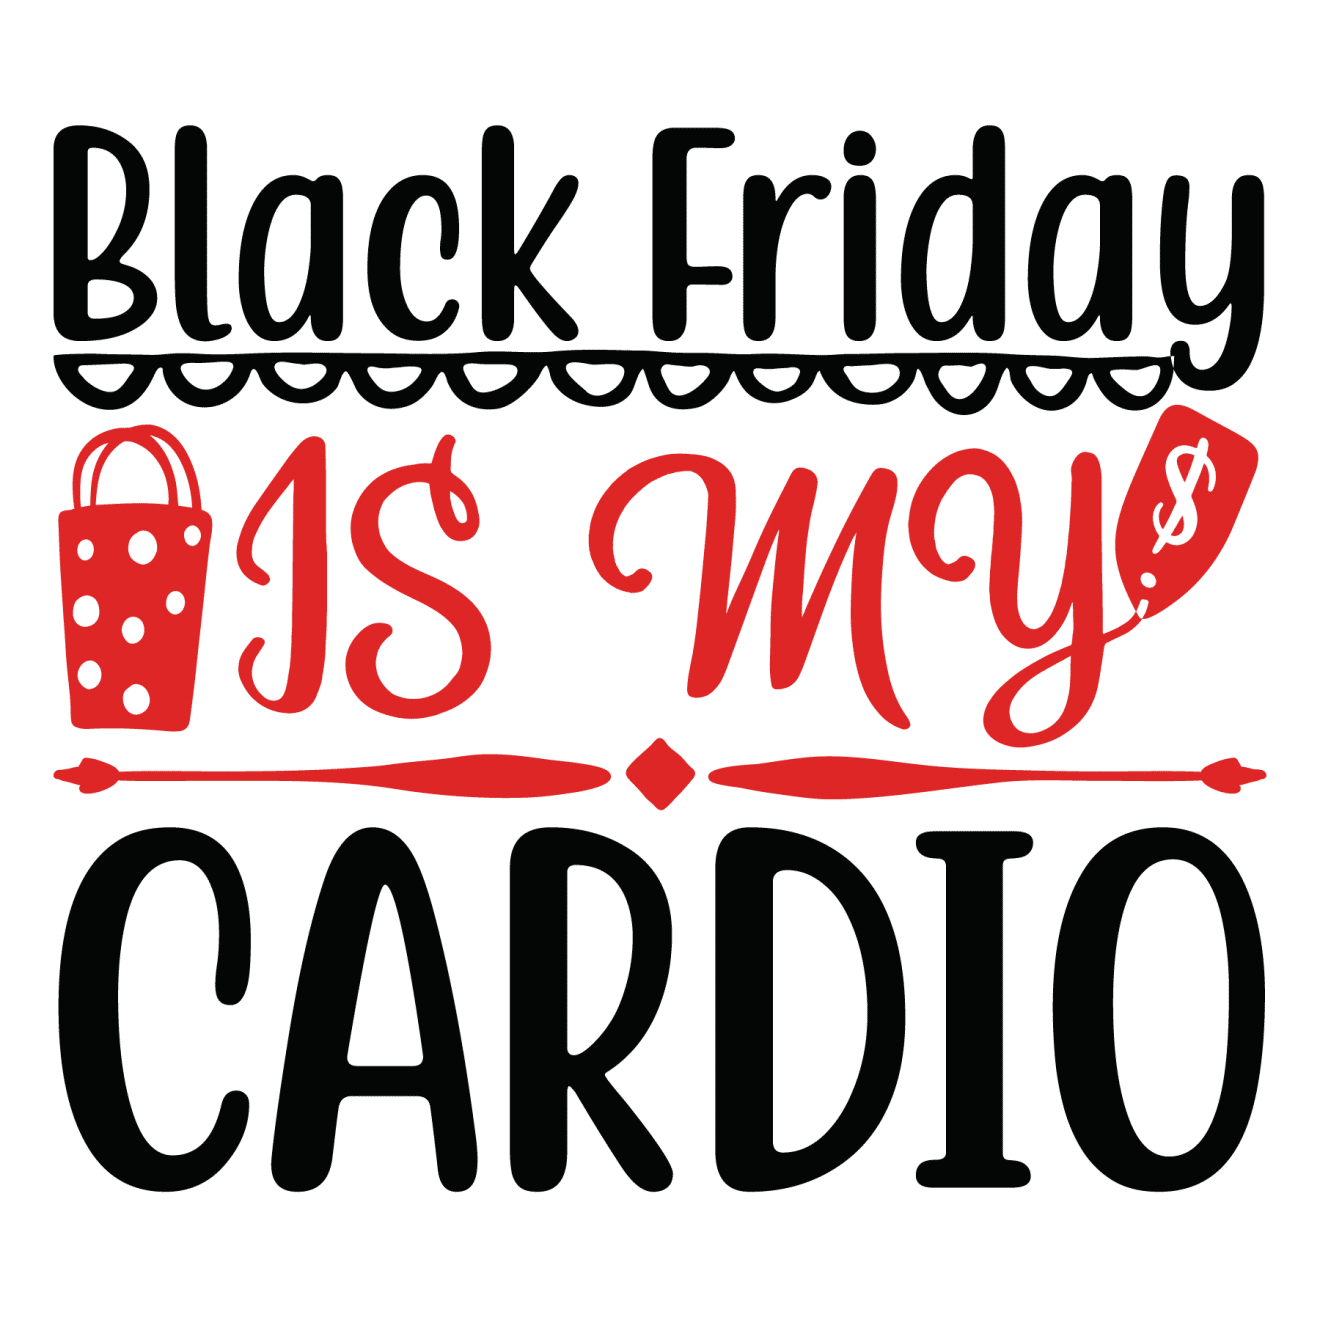 Black Friday is my cardio-01